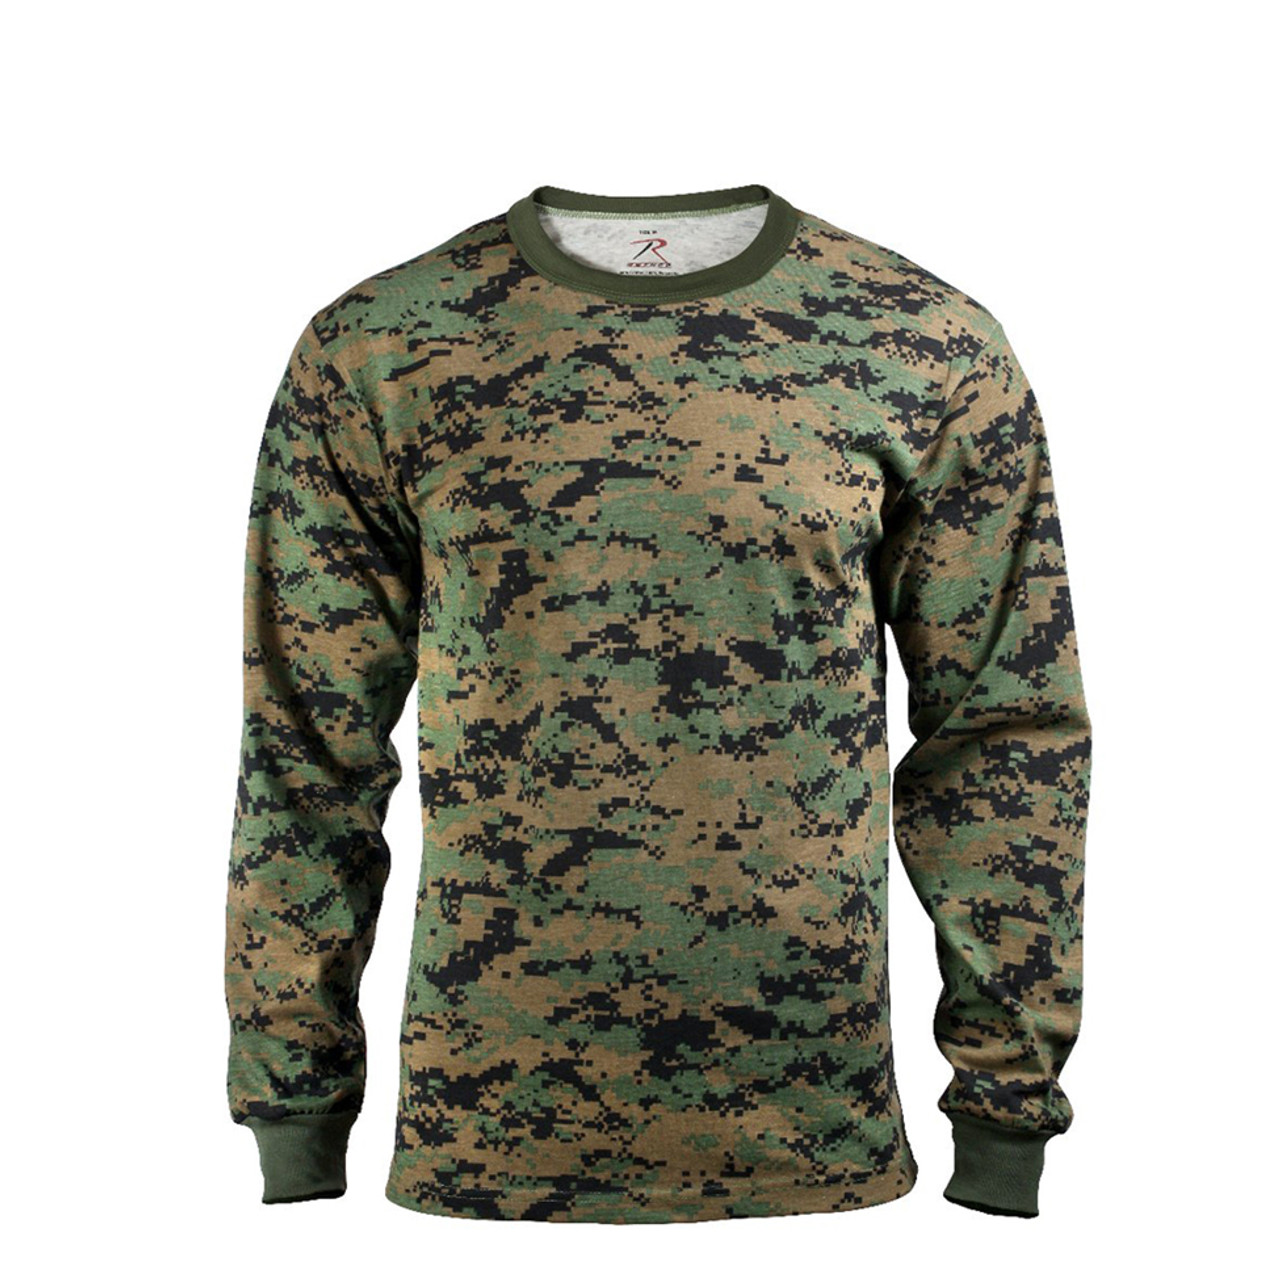 Shop Woodland Digital Camo T Shirts - Fatigues Army Navy Gear